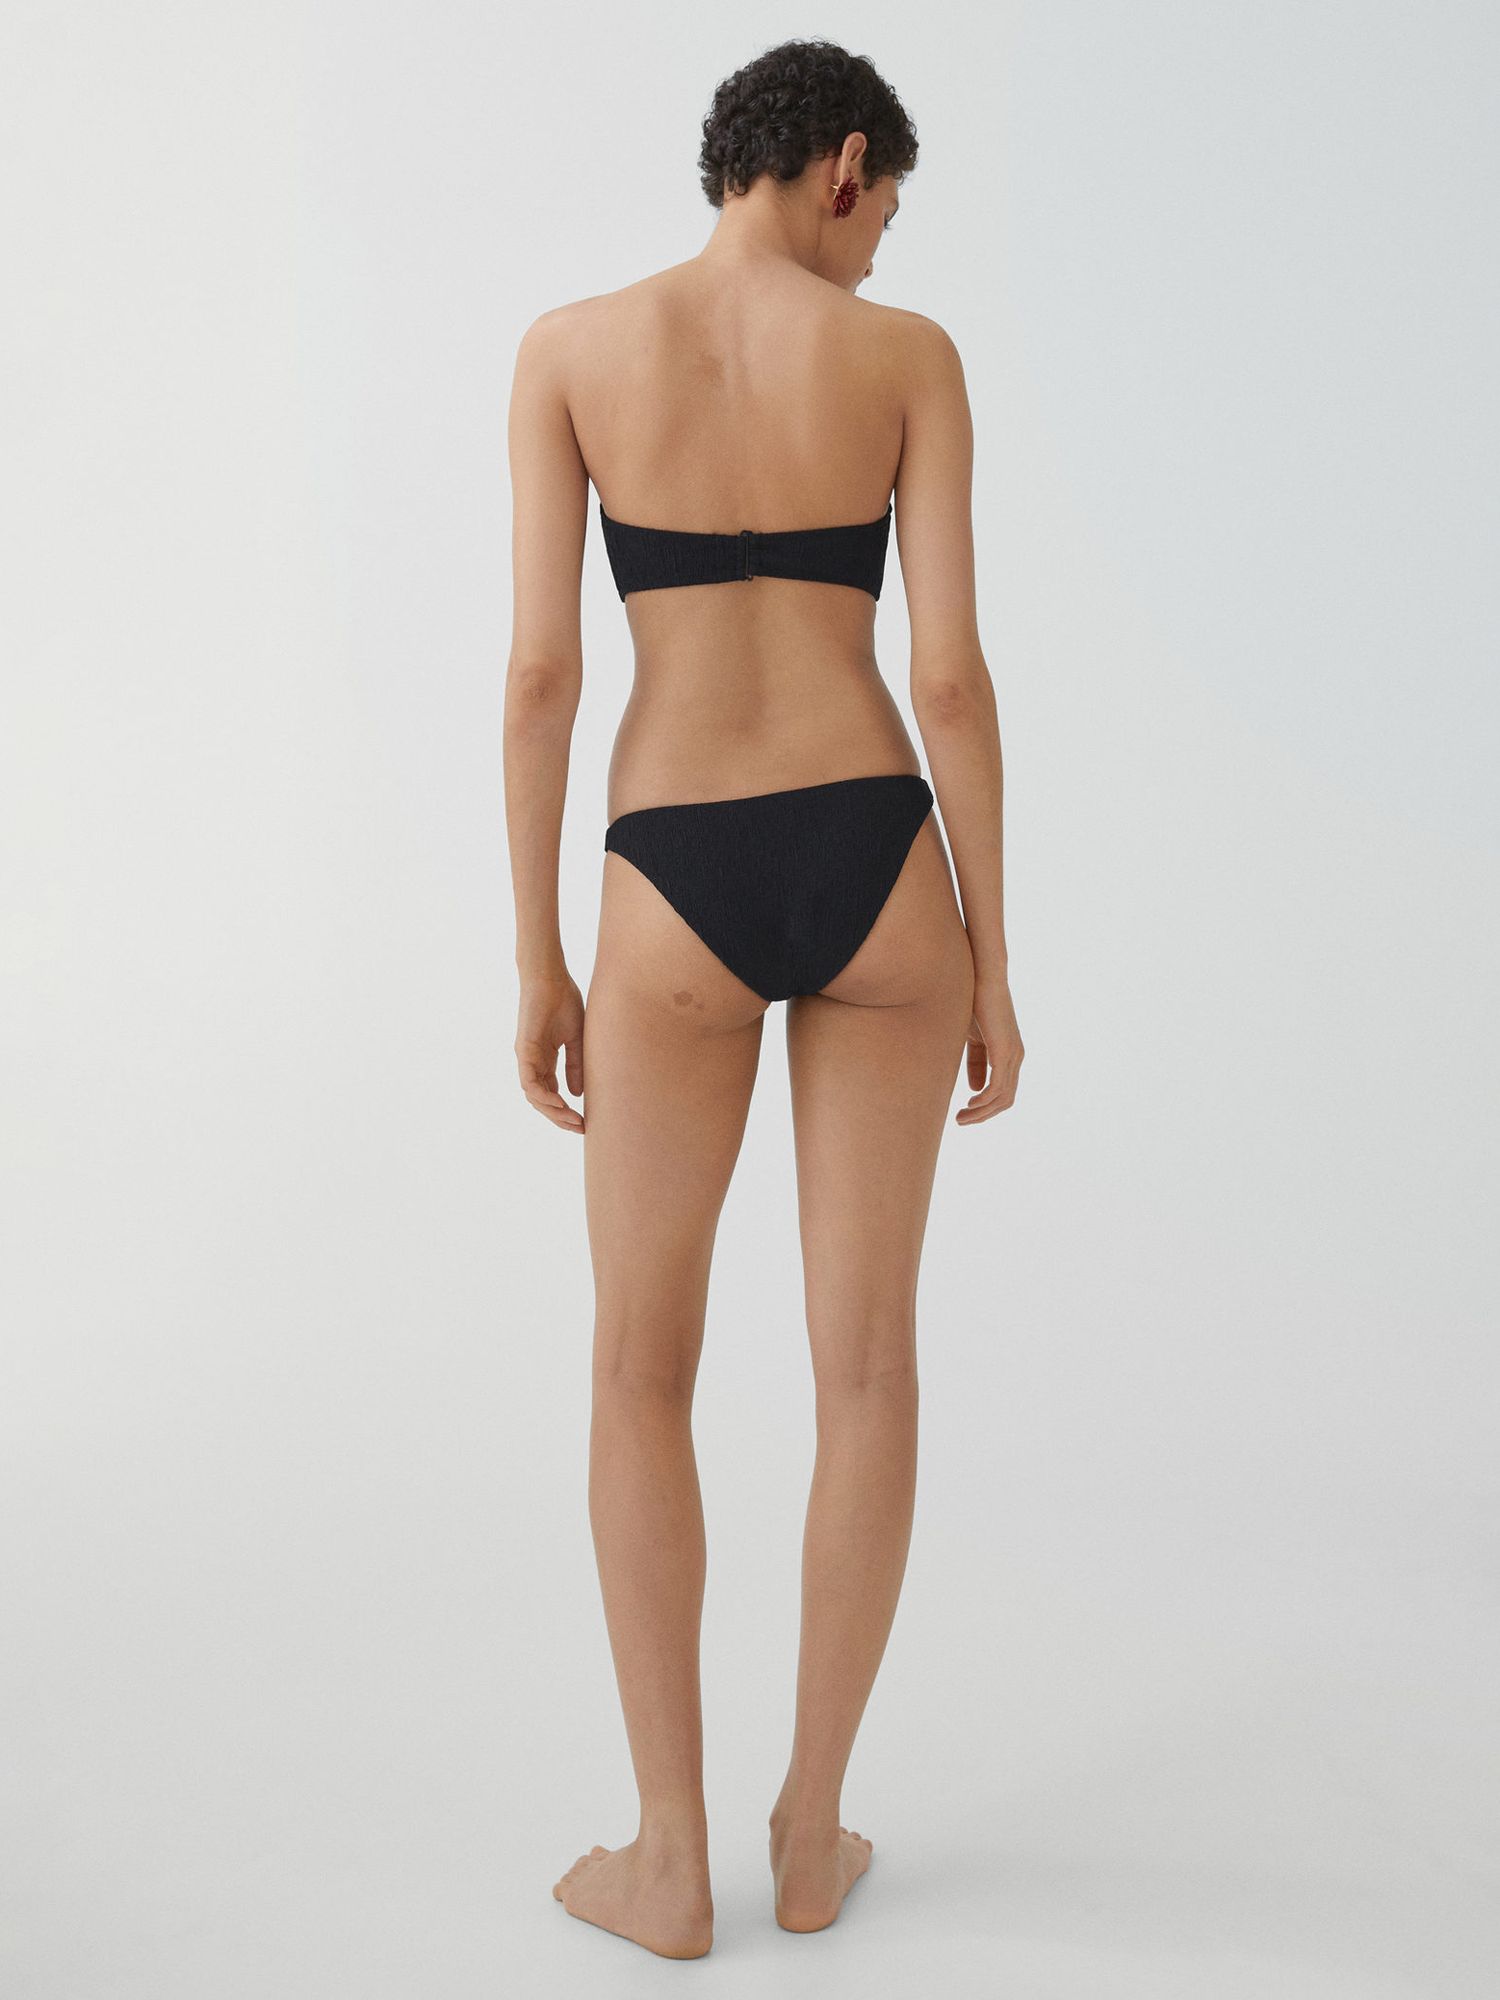 Mango Pami Textured Bikini Bottoms, Black, L